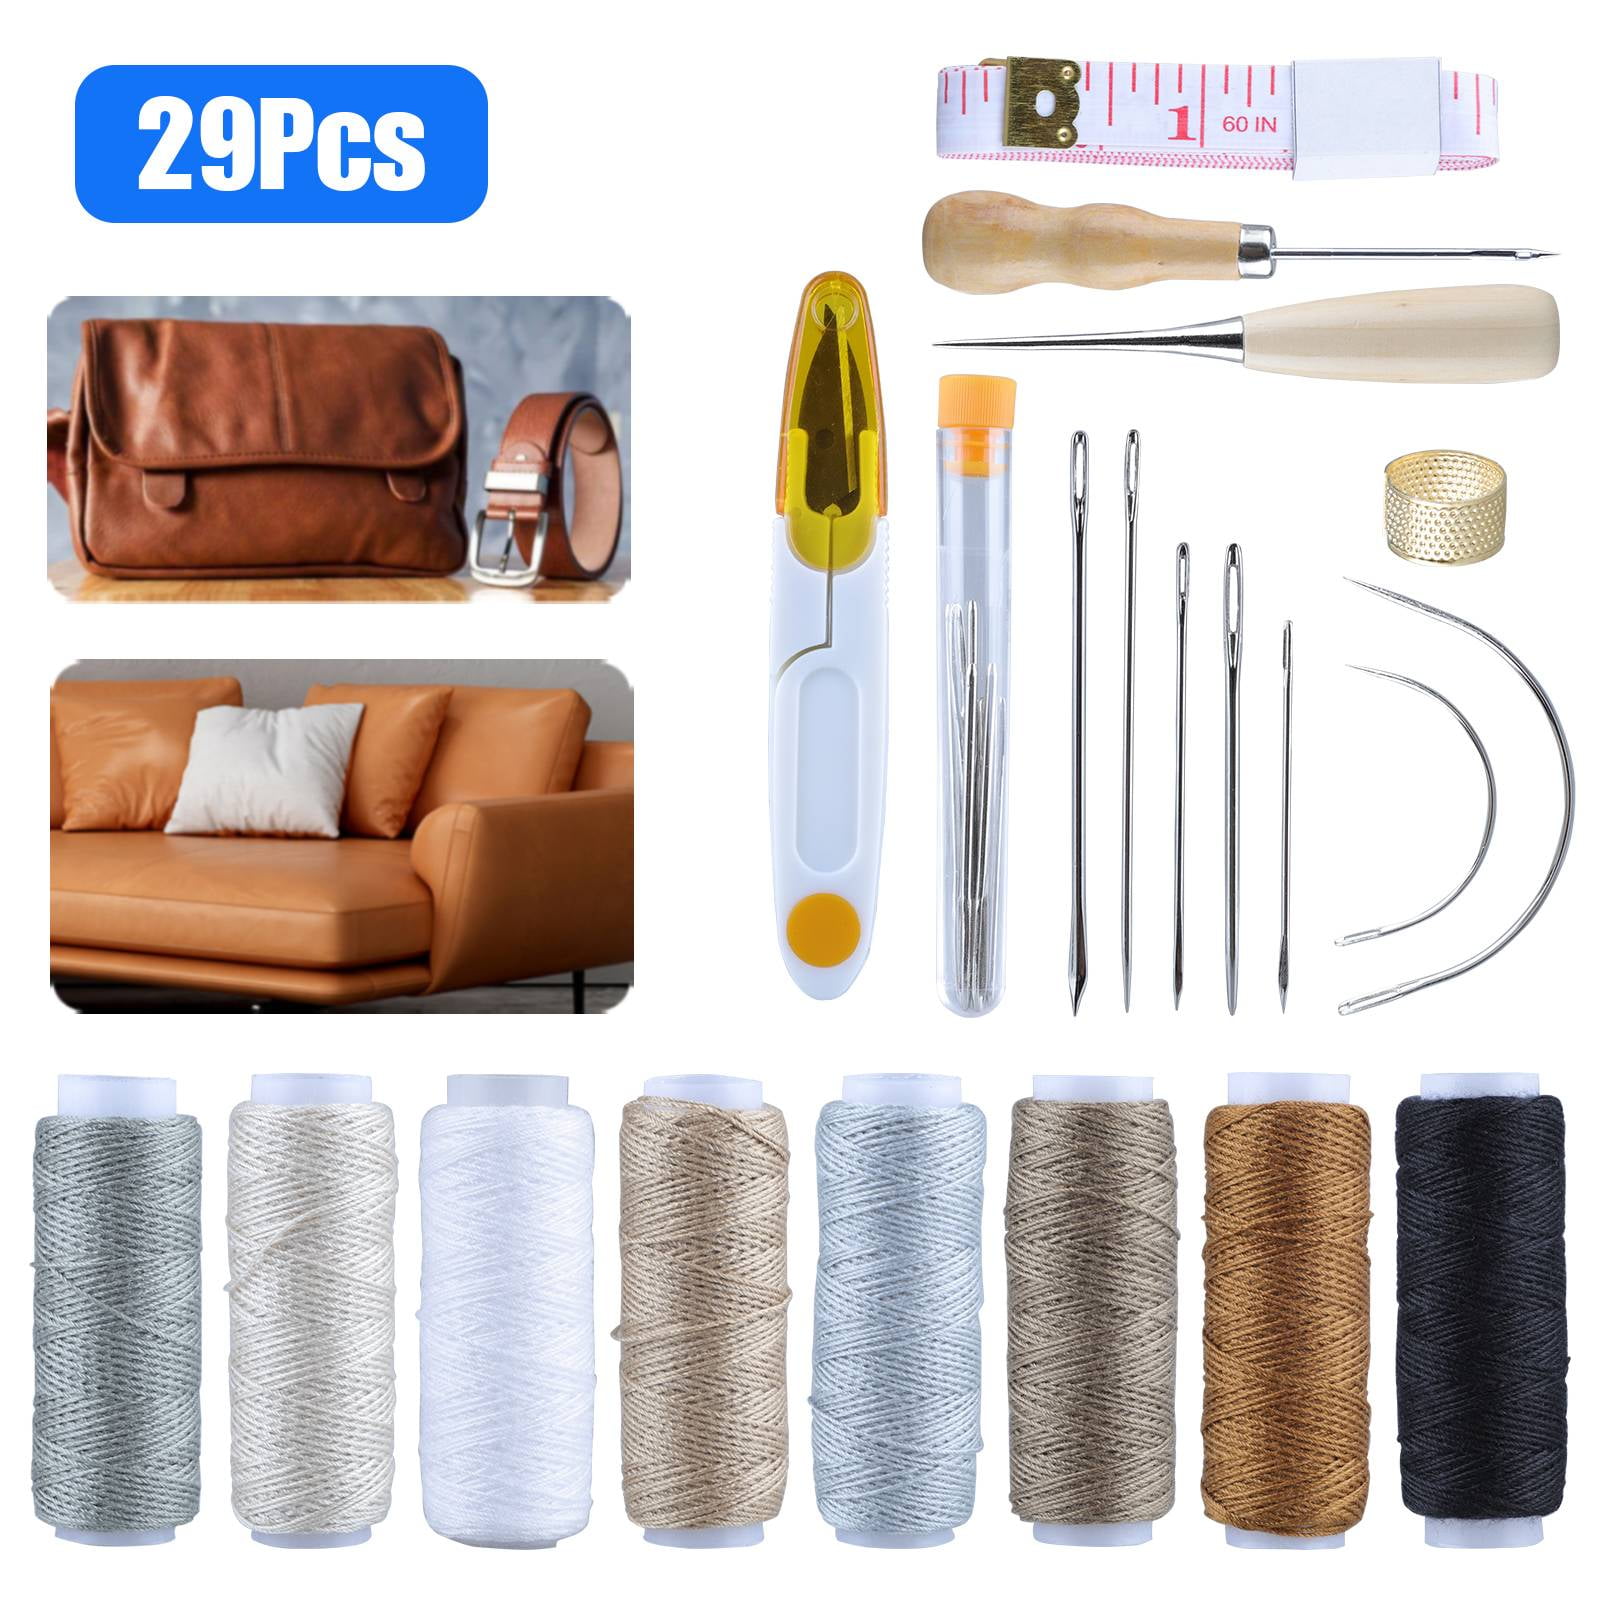  BUTUZE 32 PCS Upholstery Repair Sewing kit, Sewing